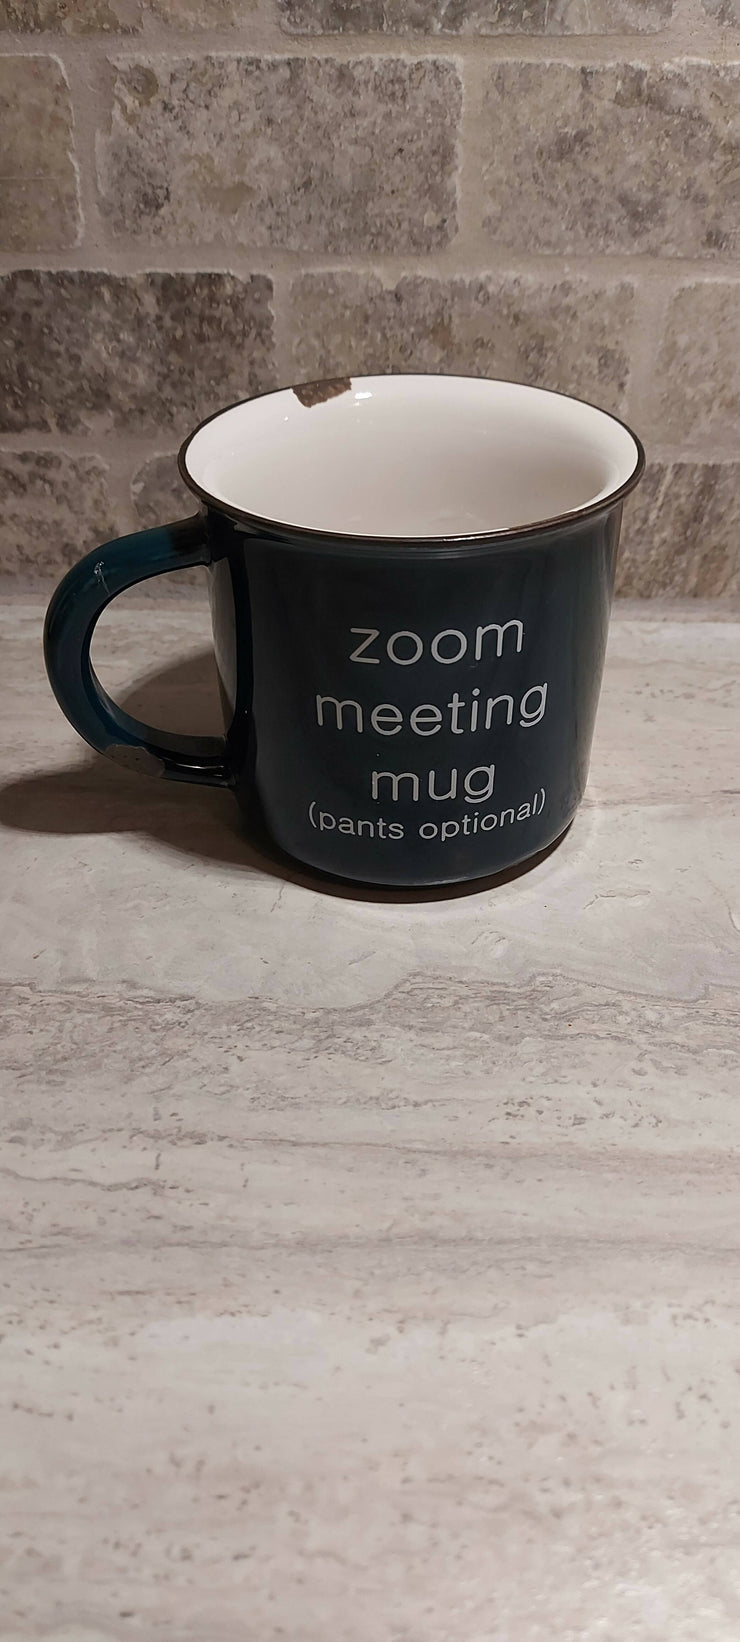 Mug Zoom meeting mug